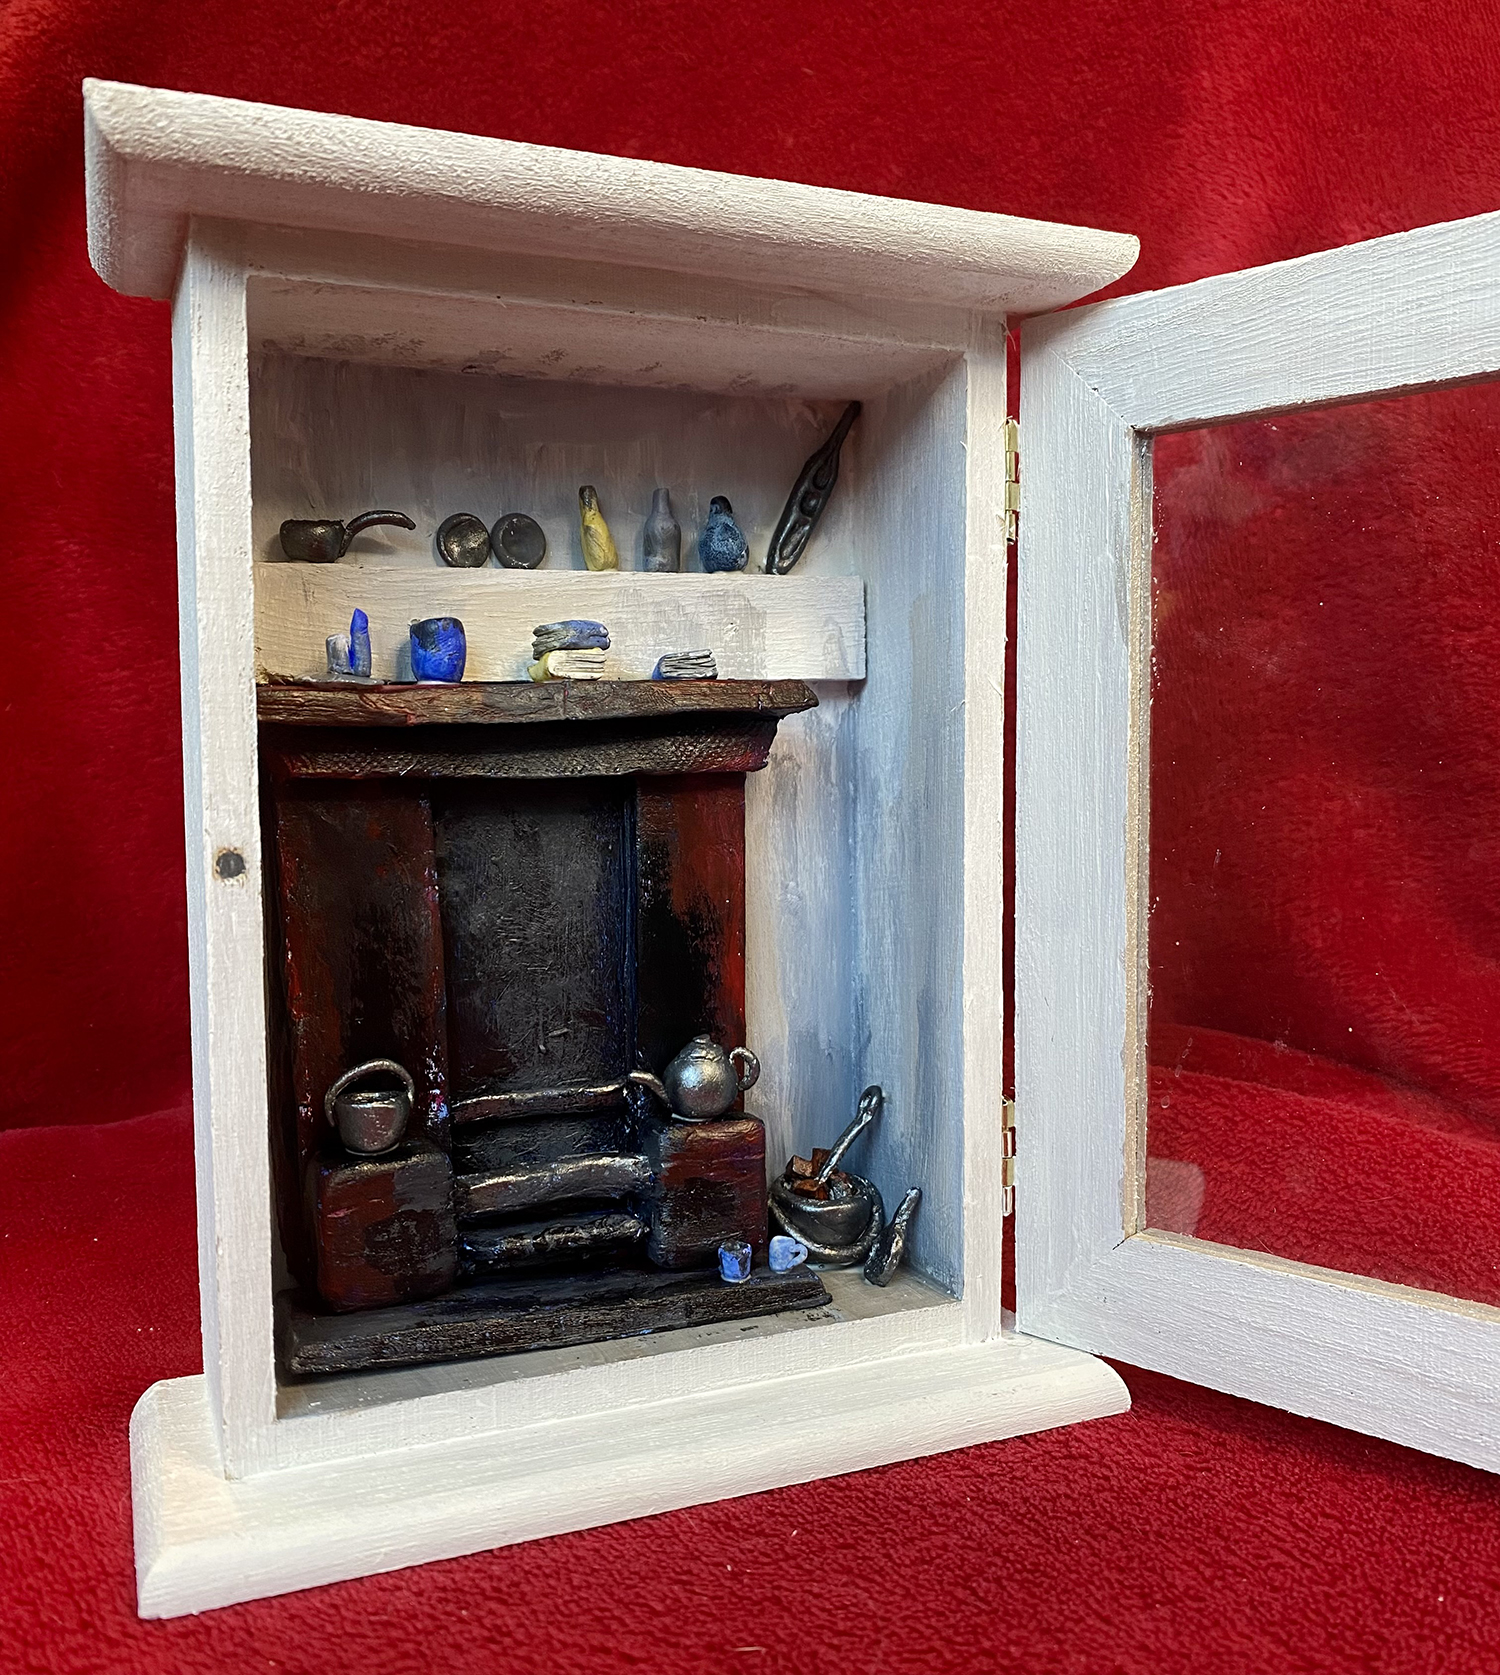 Open Box Fireplace (Bosca Beag na Scéalta) by Sharon Devlin